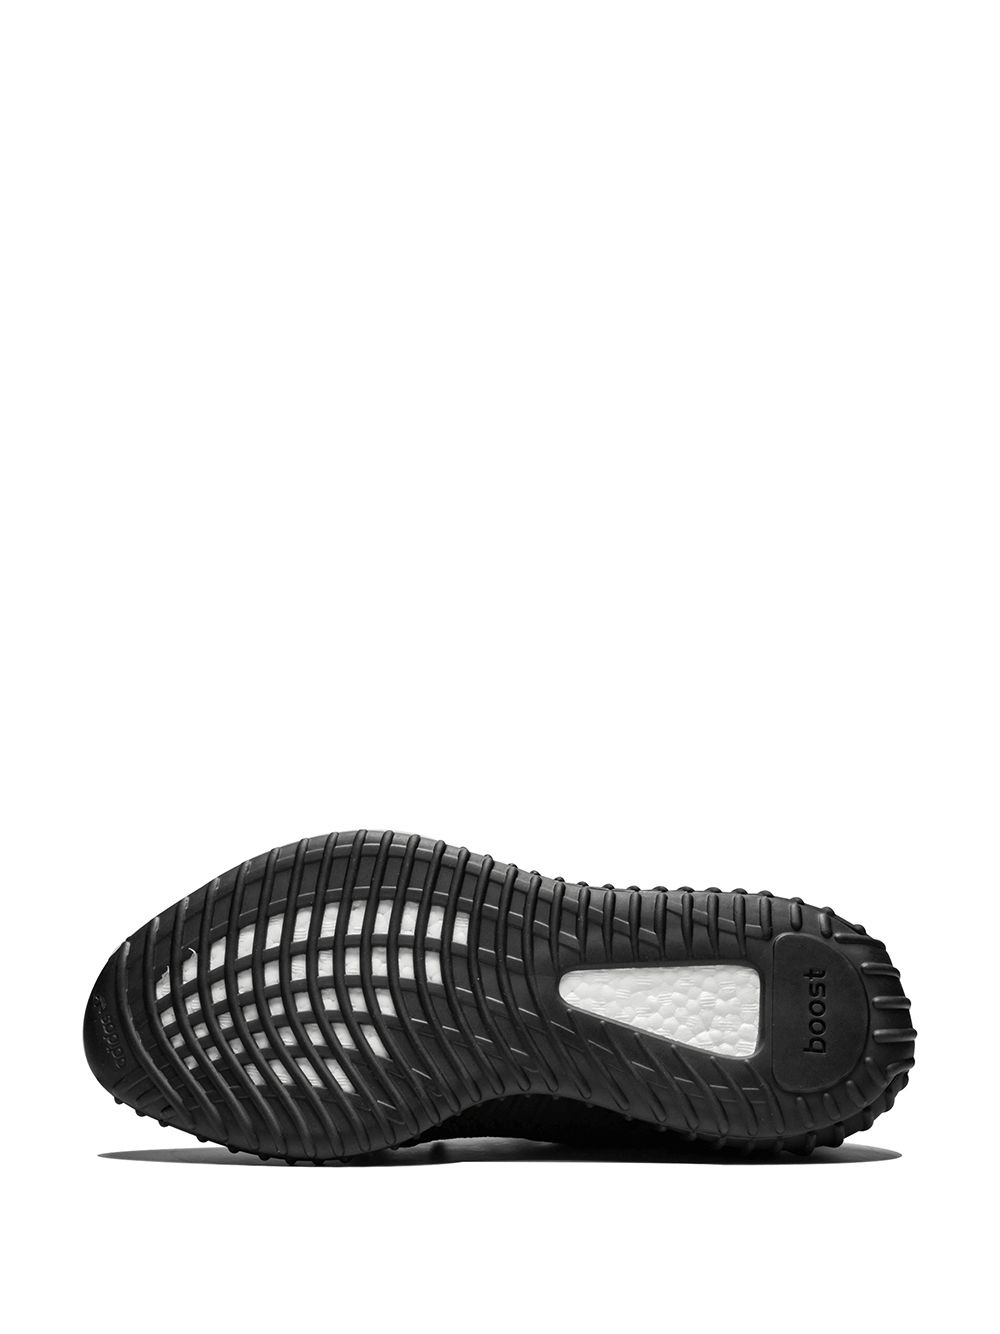 Yeezy Boost 350 V2  "Black Static" sneakers - 4